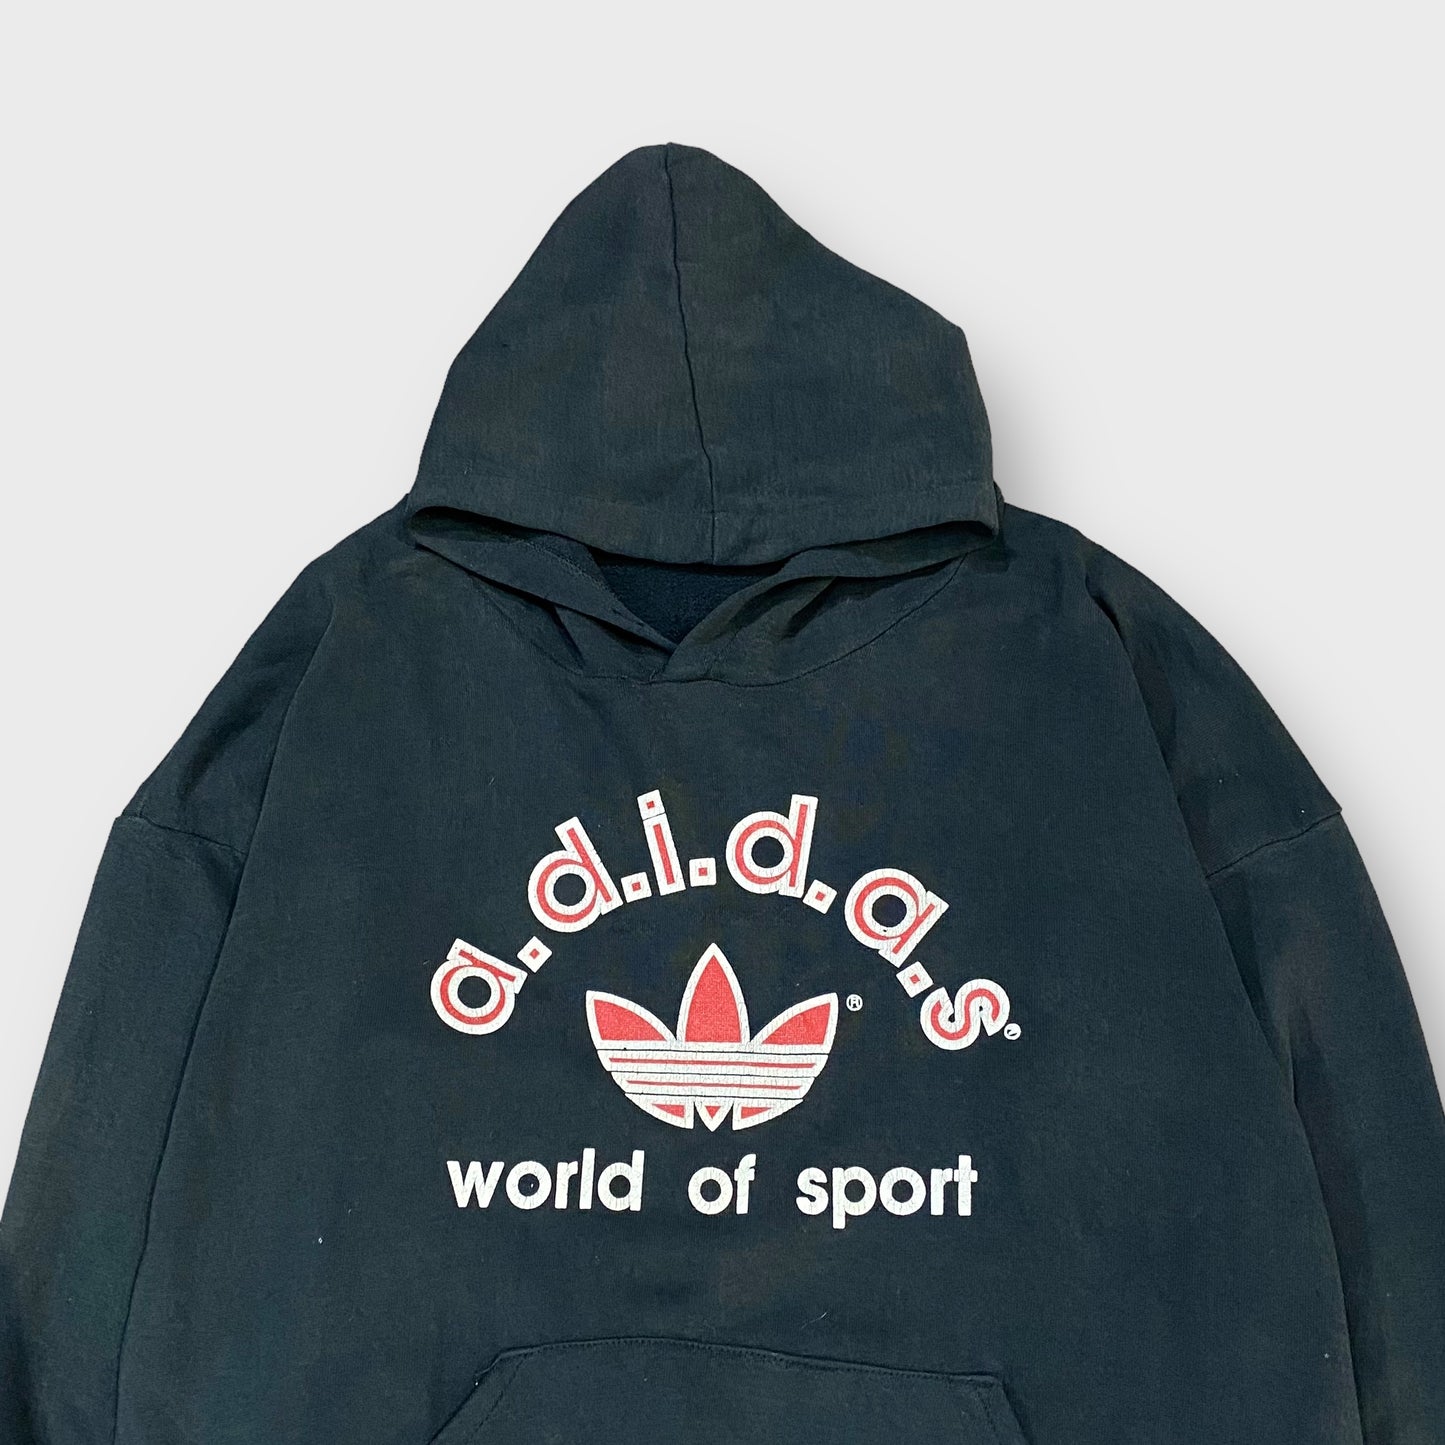 "adidas" Trefoil logo design hoodie